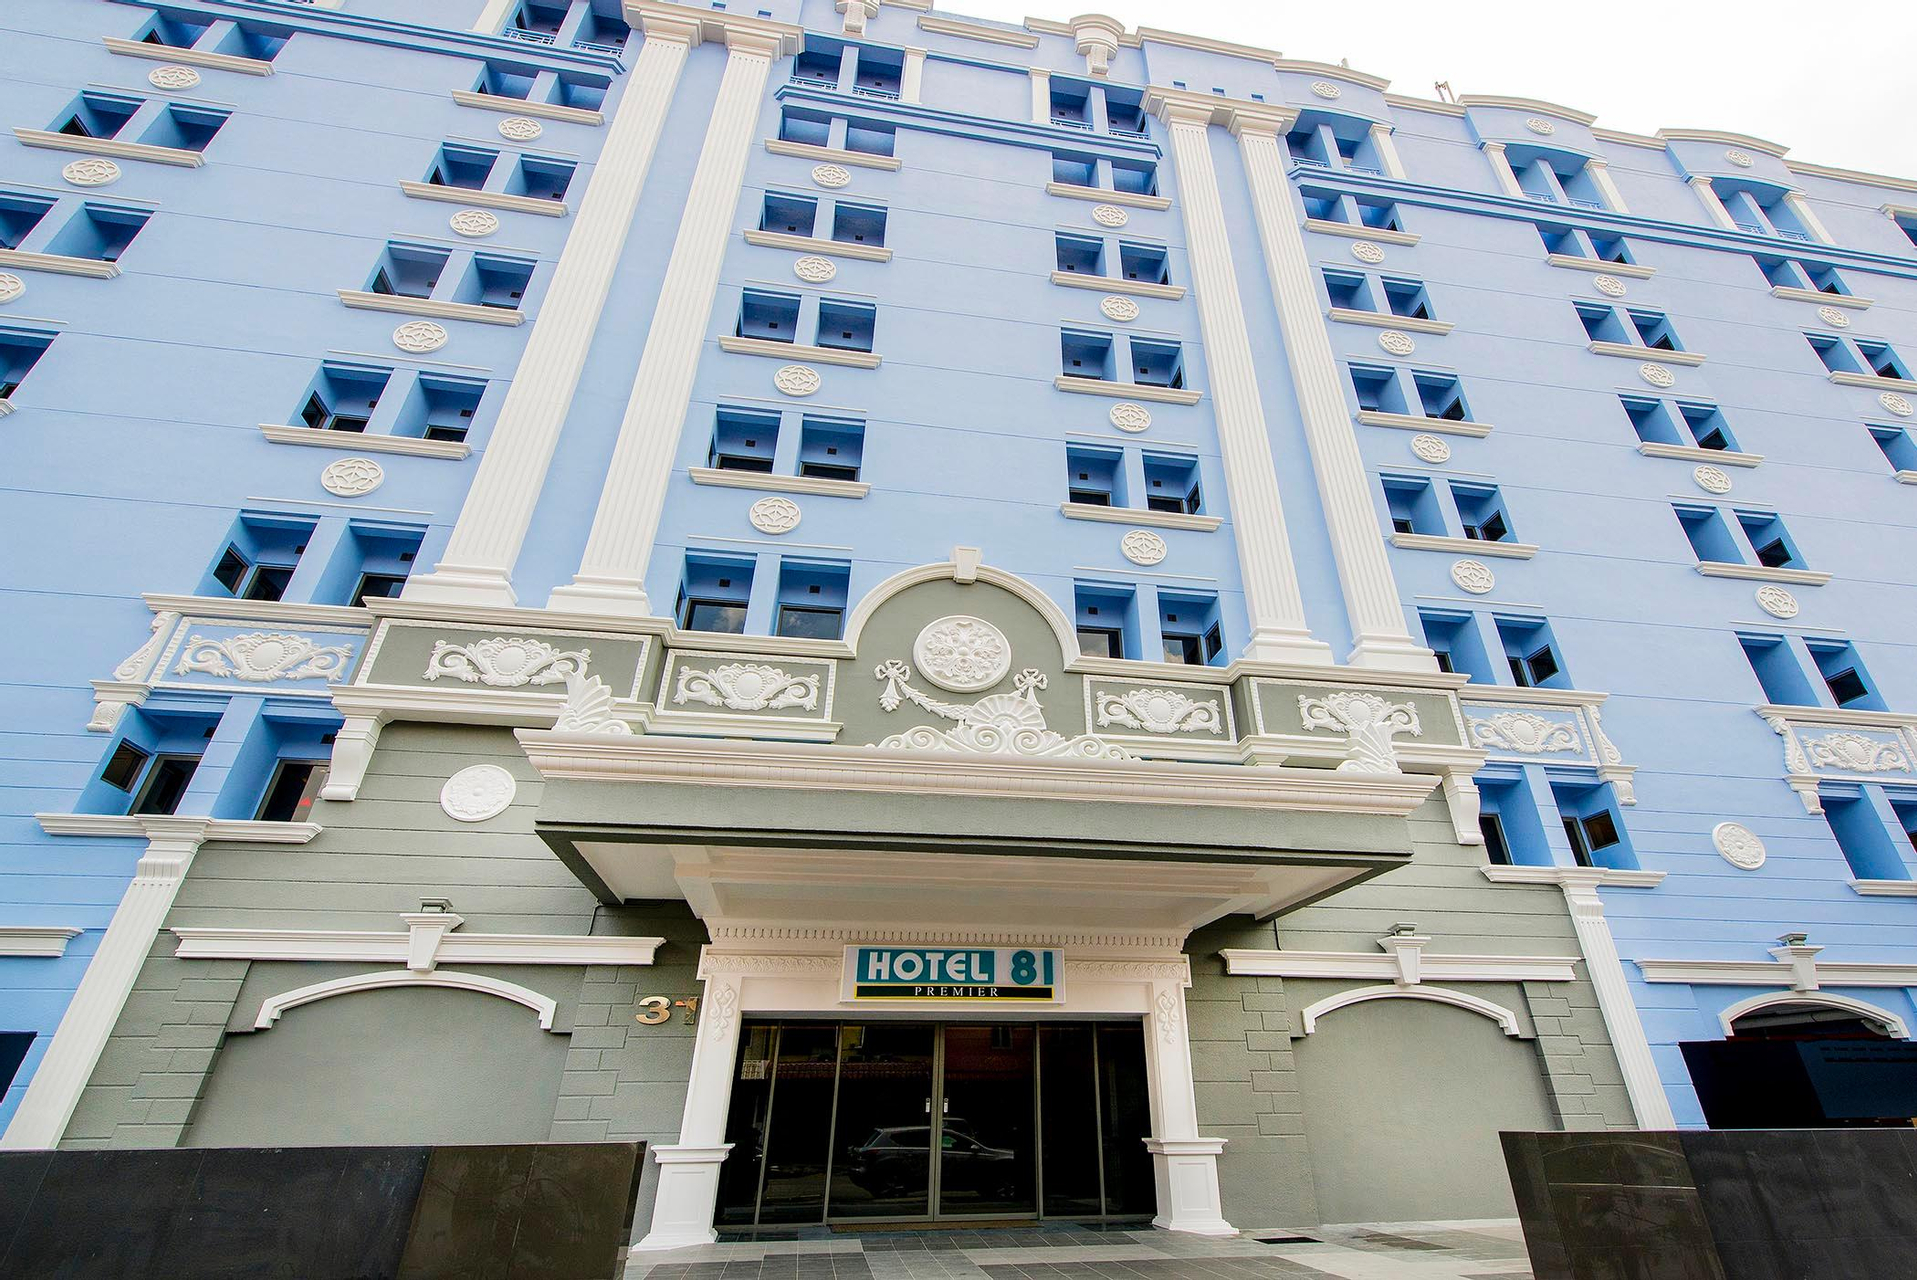 Exterior & Views, Hotel 81 Premier Star (SG Clean Certified), Singapura